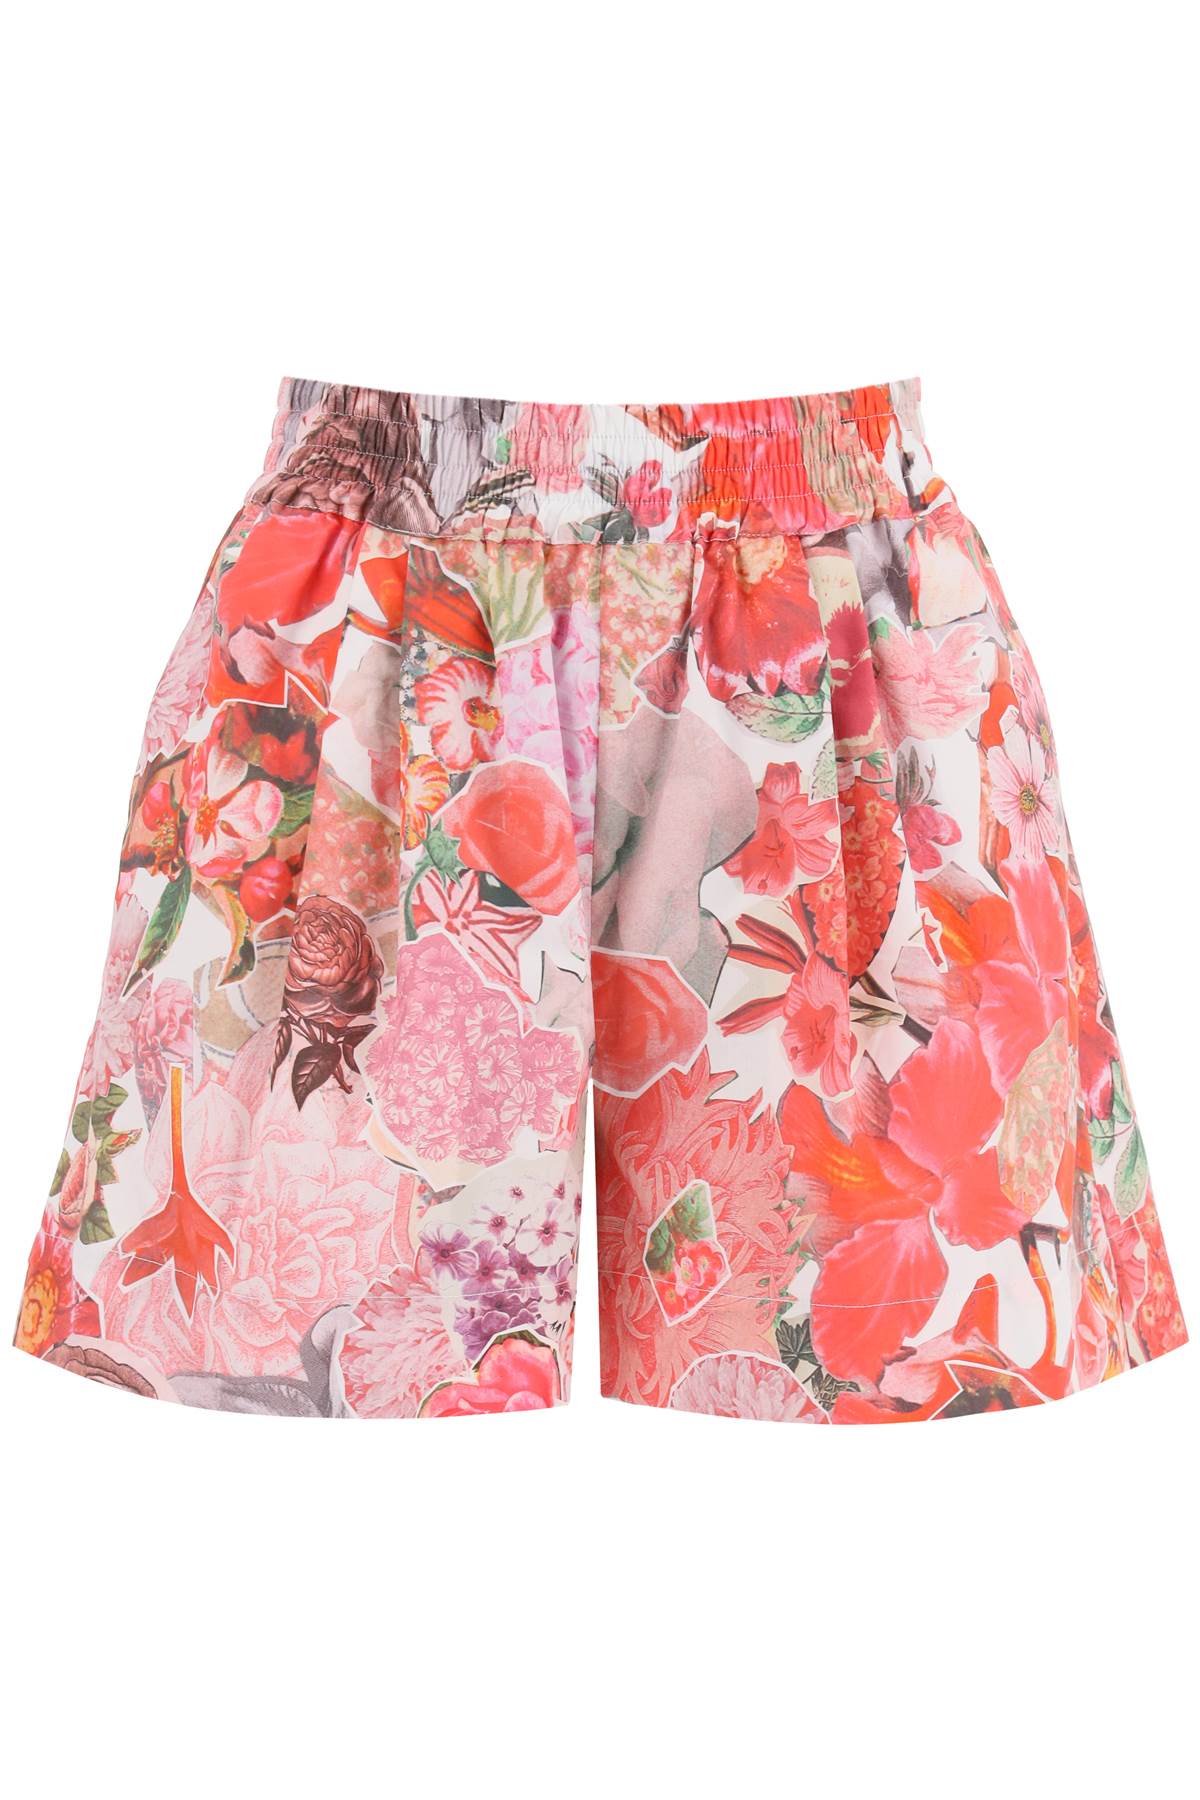 Marni floral print shorts PAMA0387A0UTC377 PINK CLEMATIS